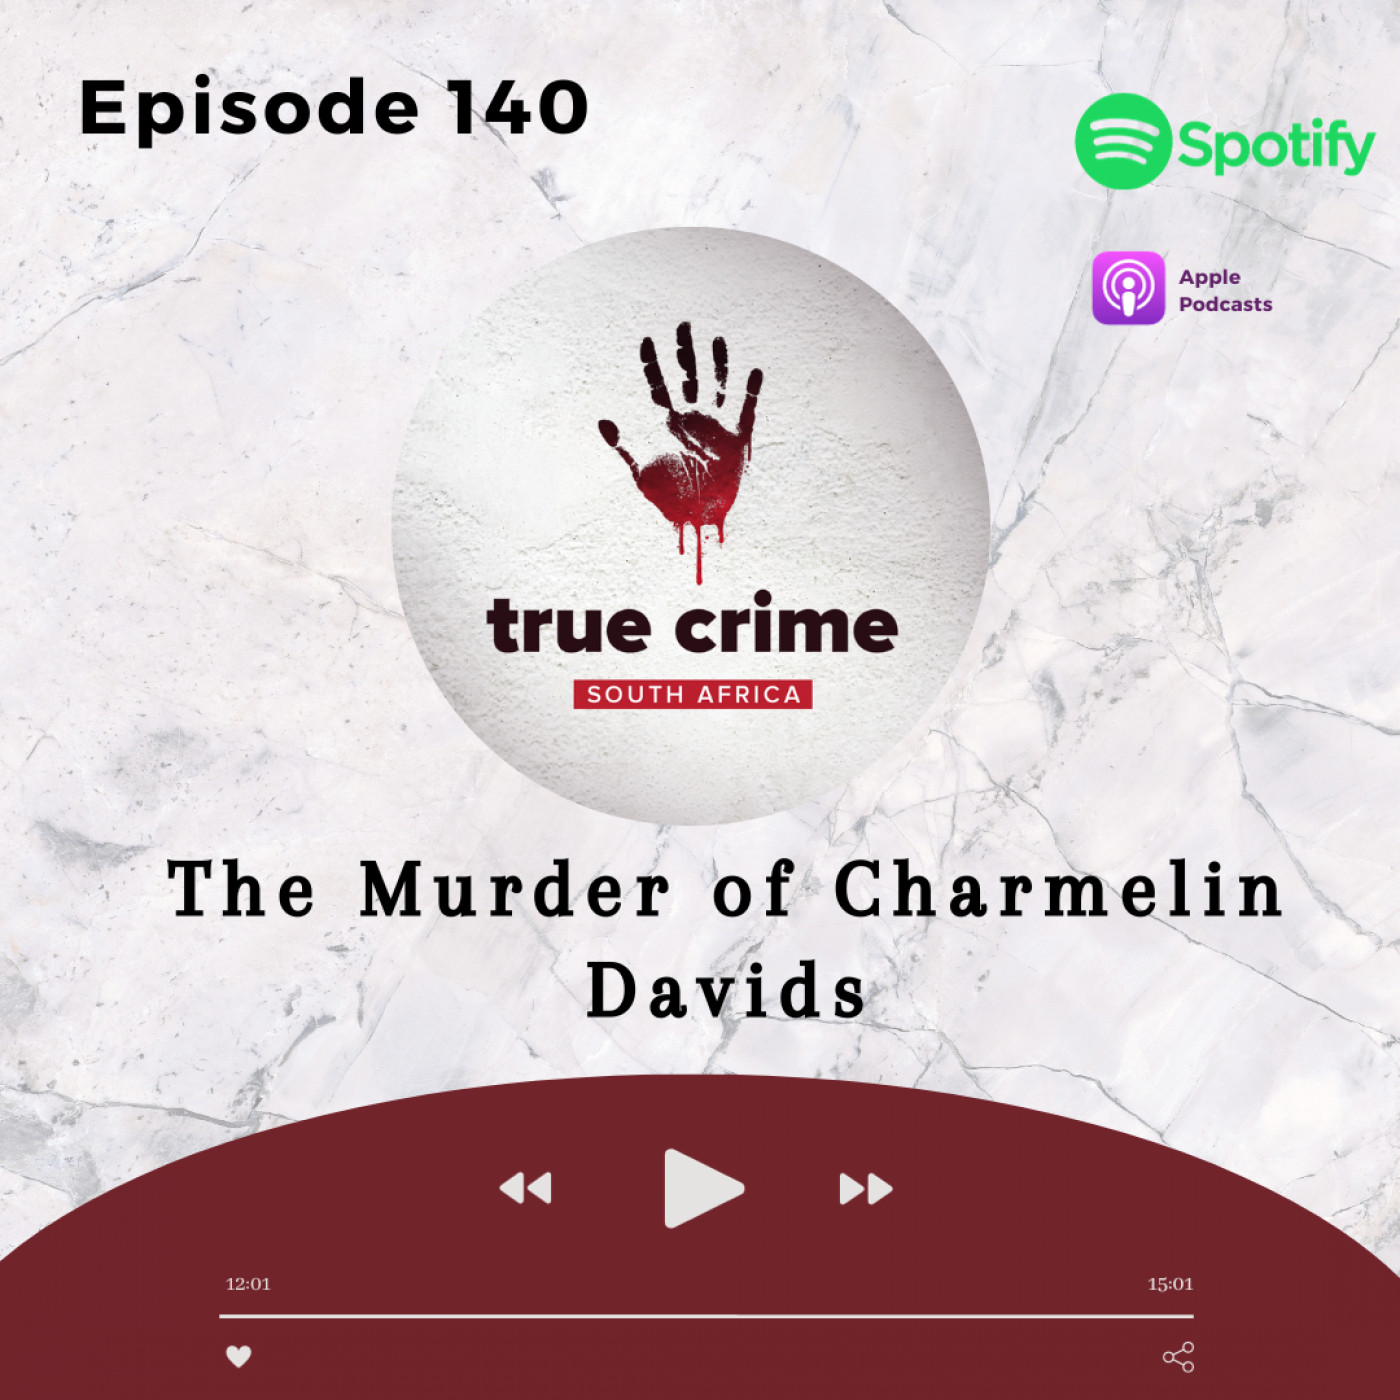 Episode 140 The Murder of Charmelin Davids